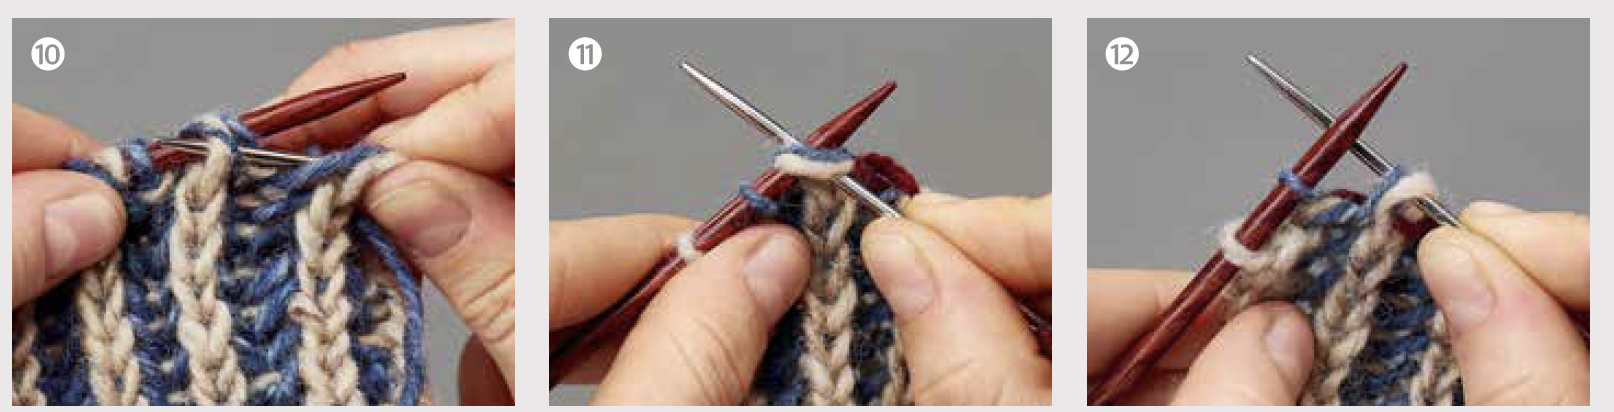 How to cast off brioche stitch steps 10-12